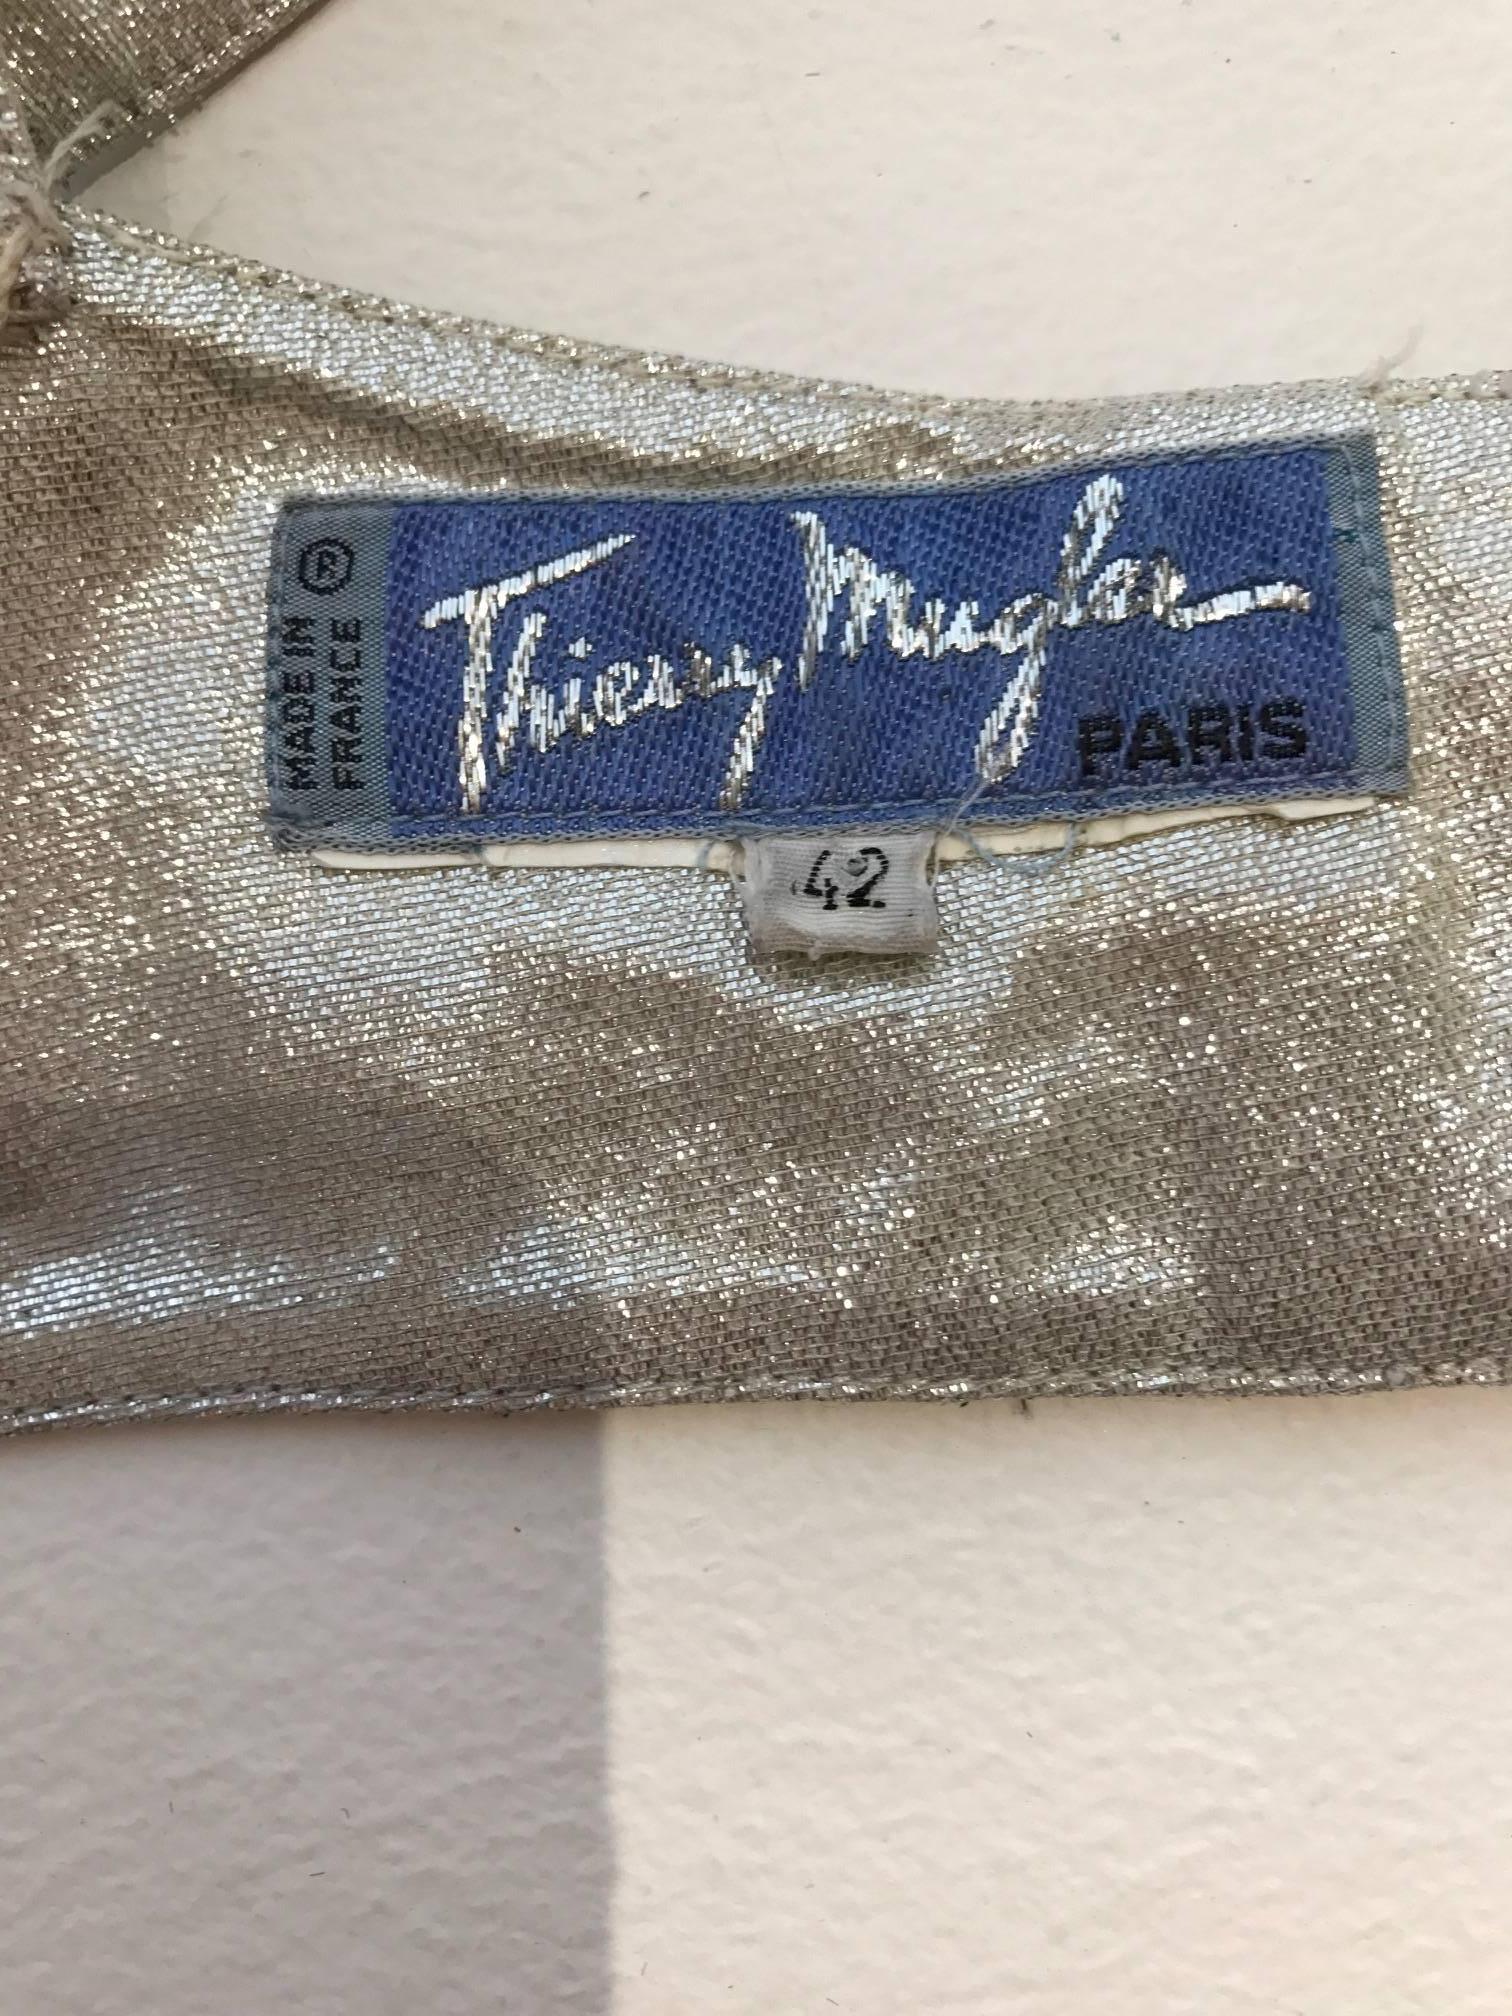 Vintage 1990s Thierry Mugler silver metallic bra 90s top
Fit 34 C